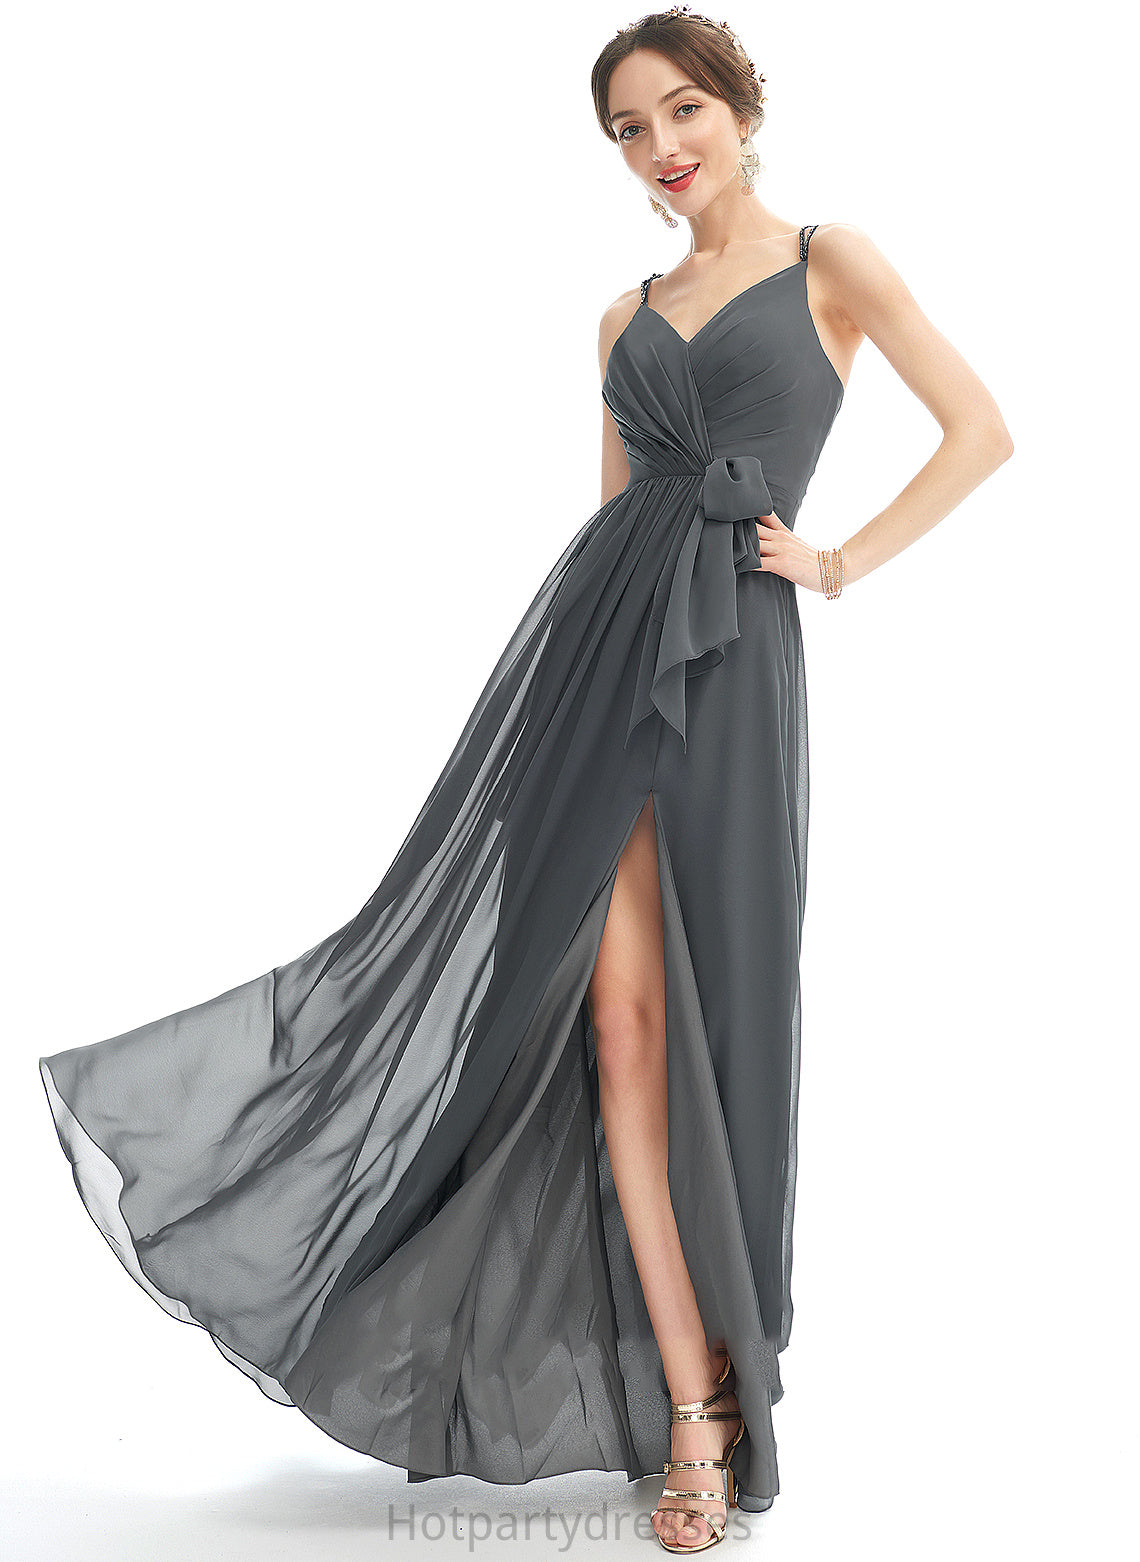 Length Neckline A-Line Ruffle V-neck Fabric Silhouette Floor-Length Beading Embellishment SplitFront Marely Bridesmaid Dresses